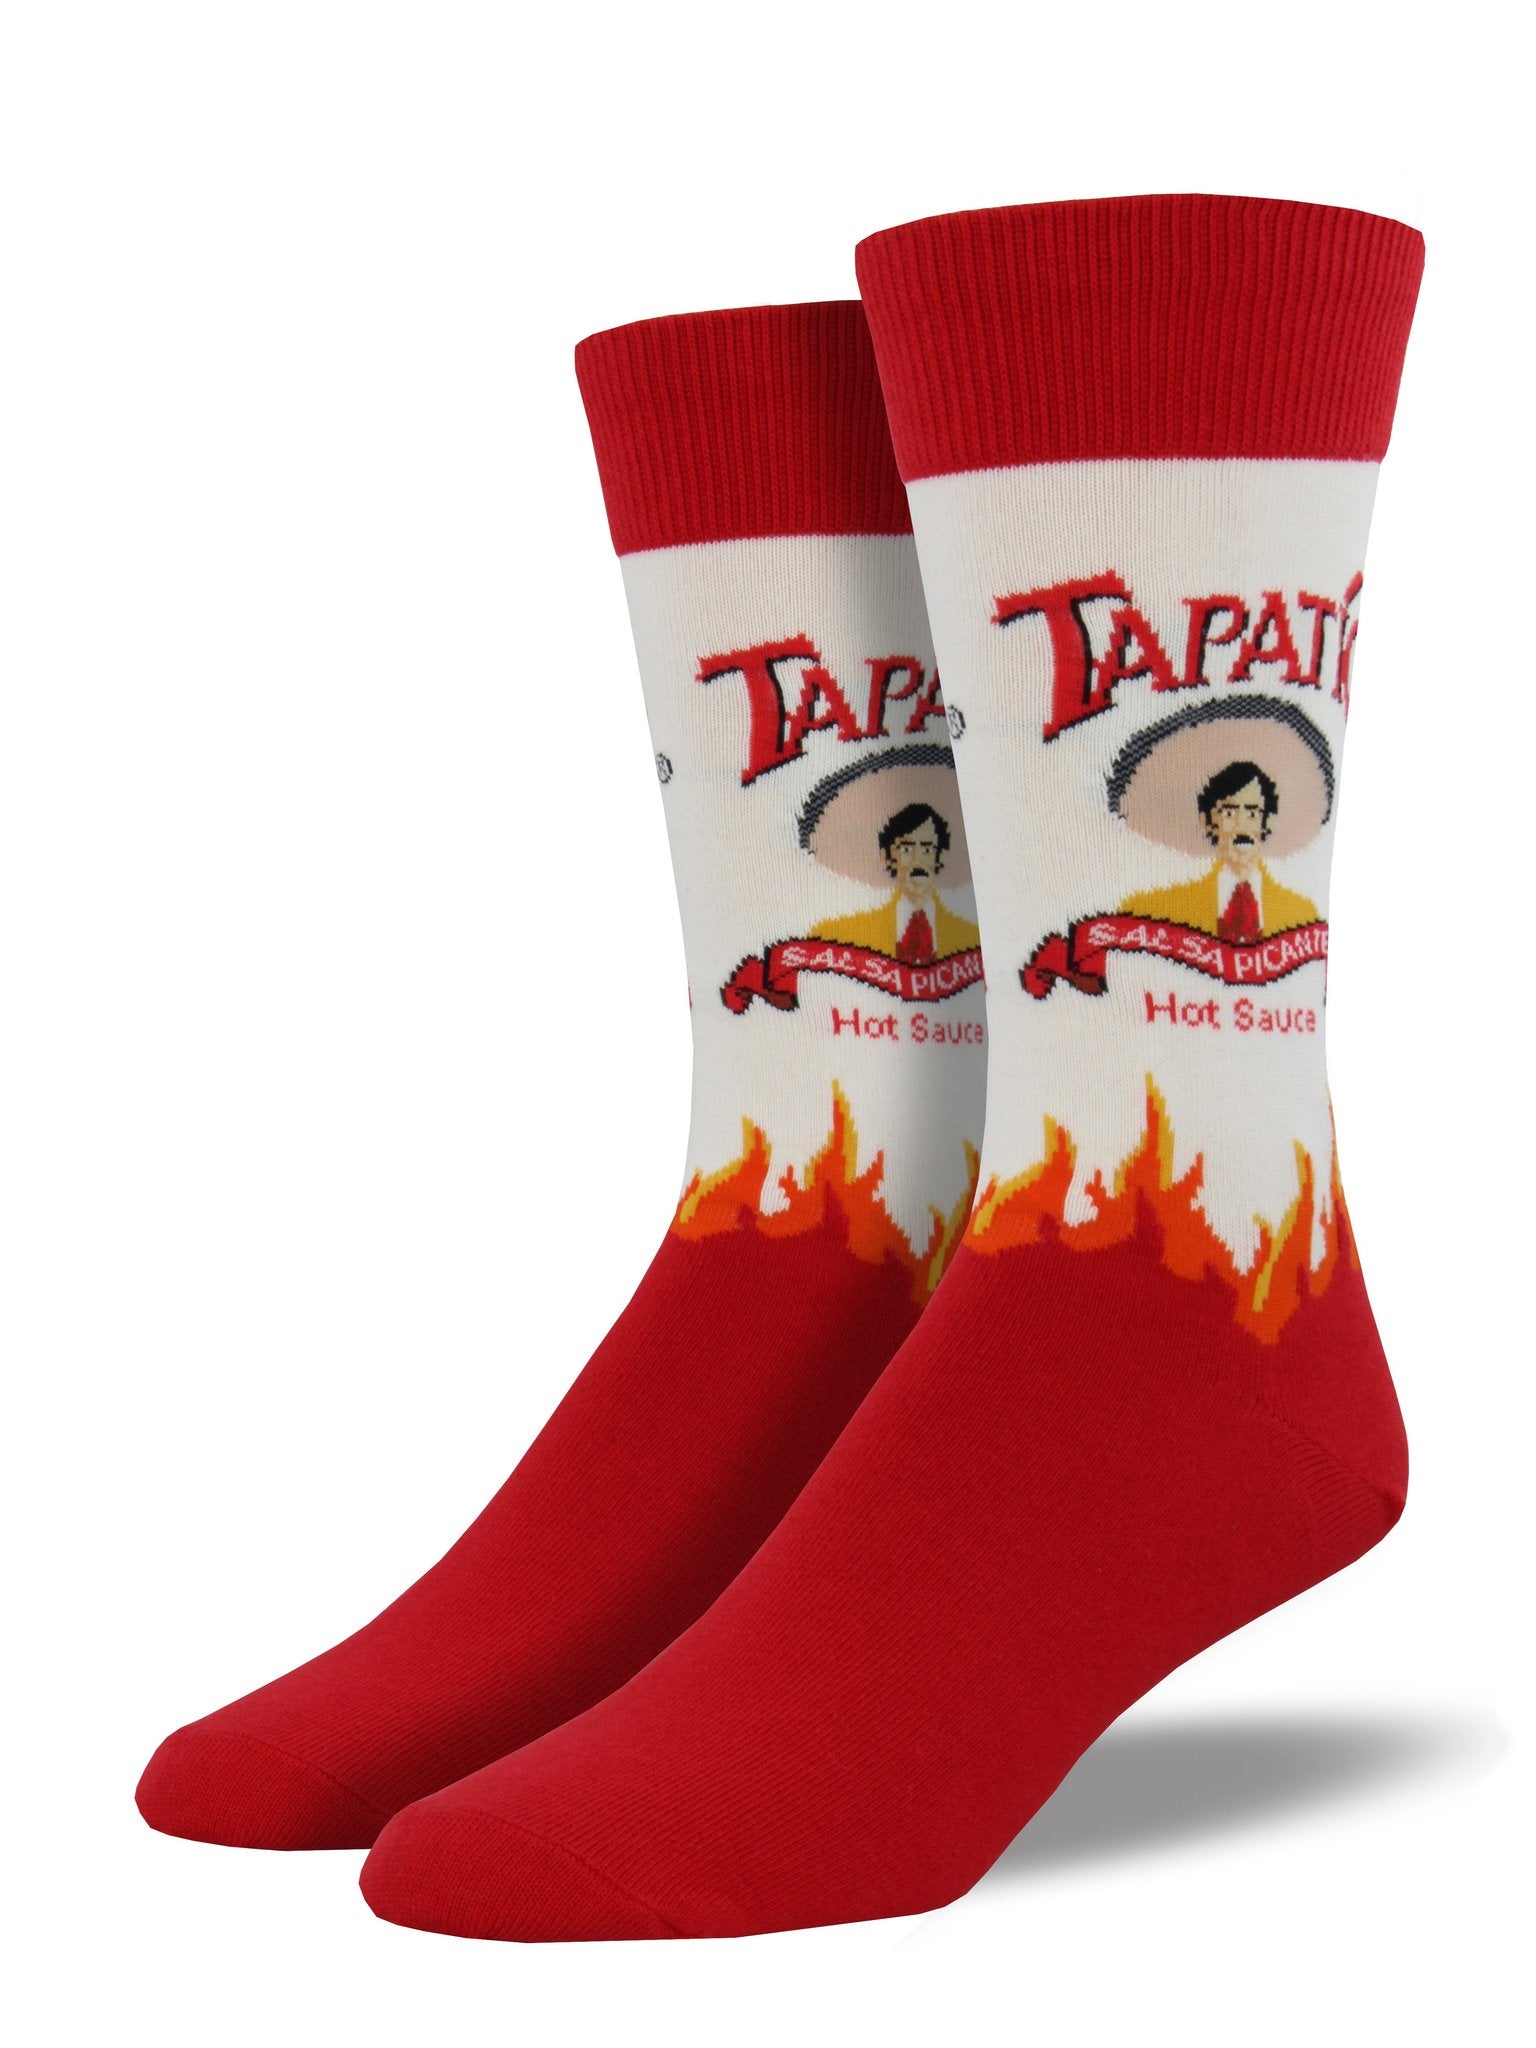 Tapatio Men's Crew Socks White